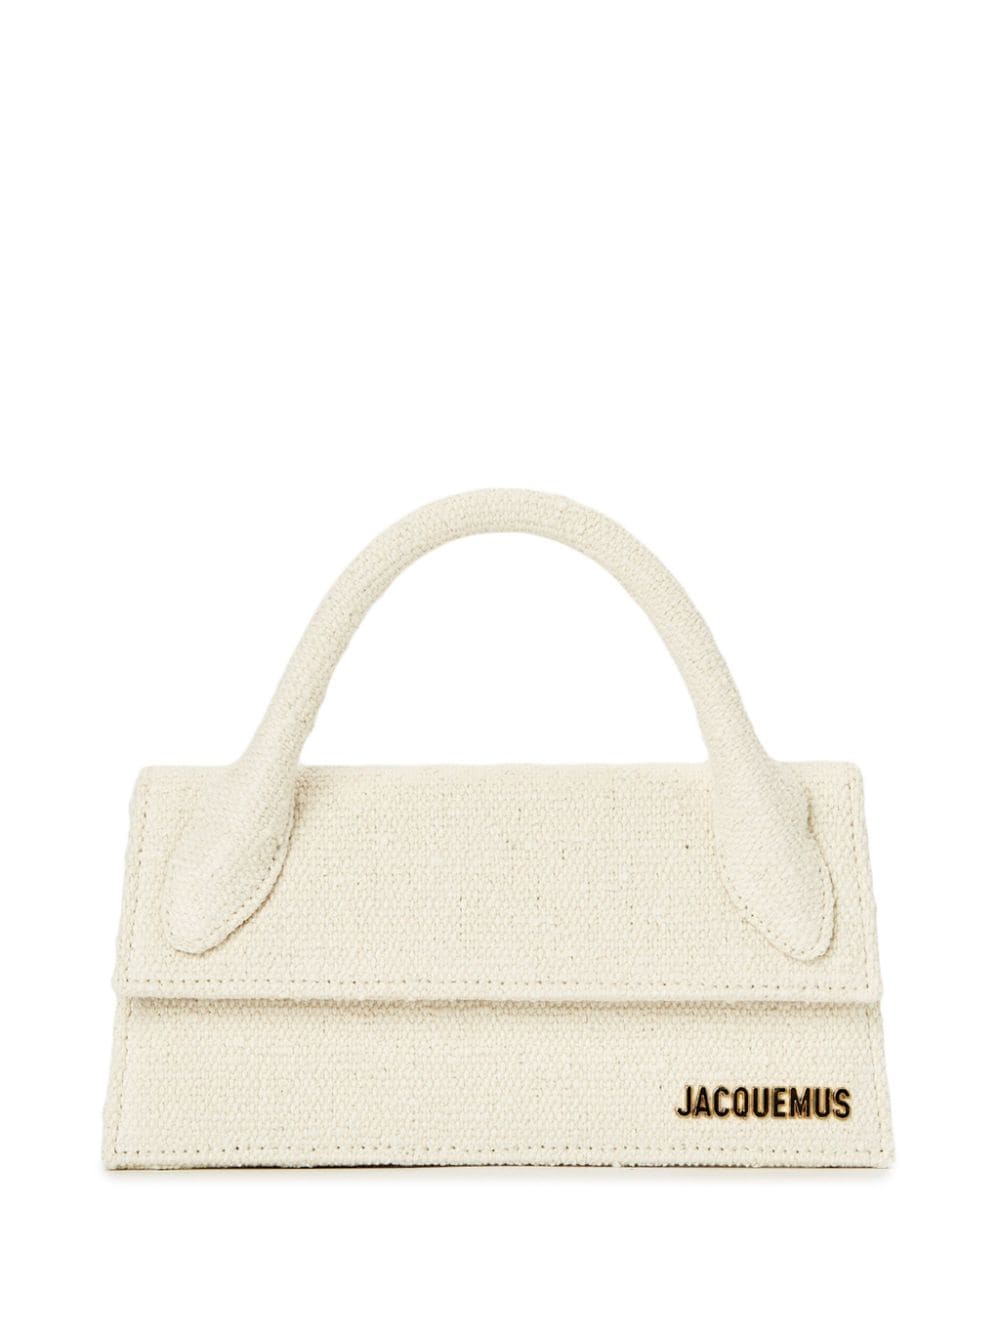 Jacquemus Le Chiquito long tote bag, White